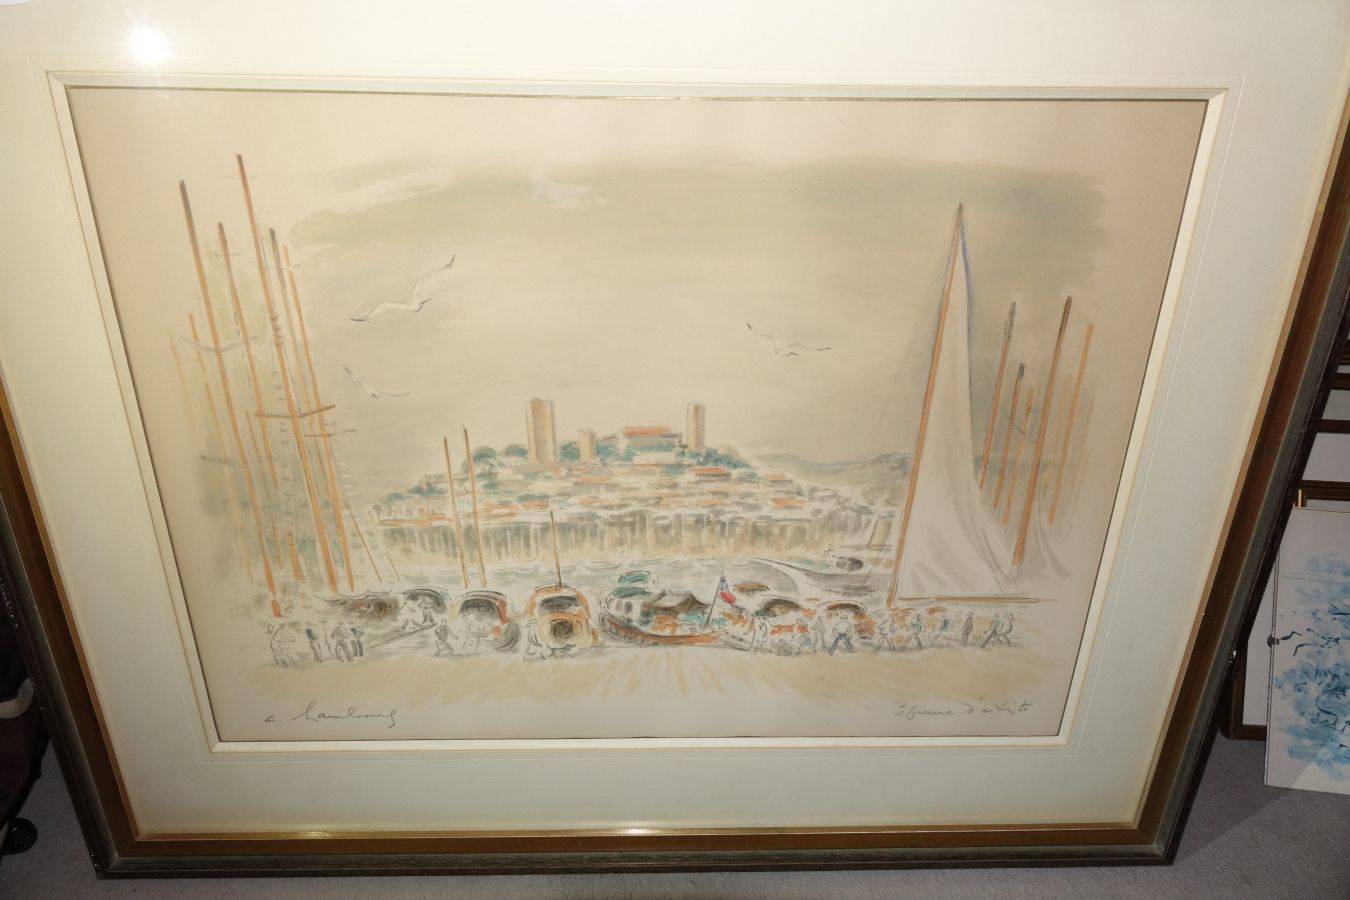 Null HAMBURG André (1909-1999)

戛纳港

彩色平版印刷。EA.

44.5 x 61.5厘米